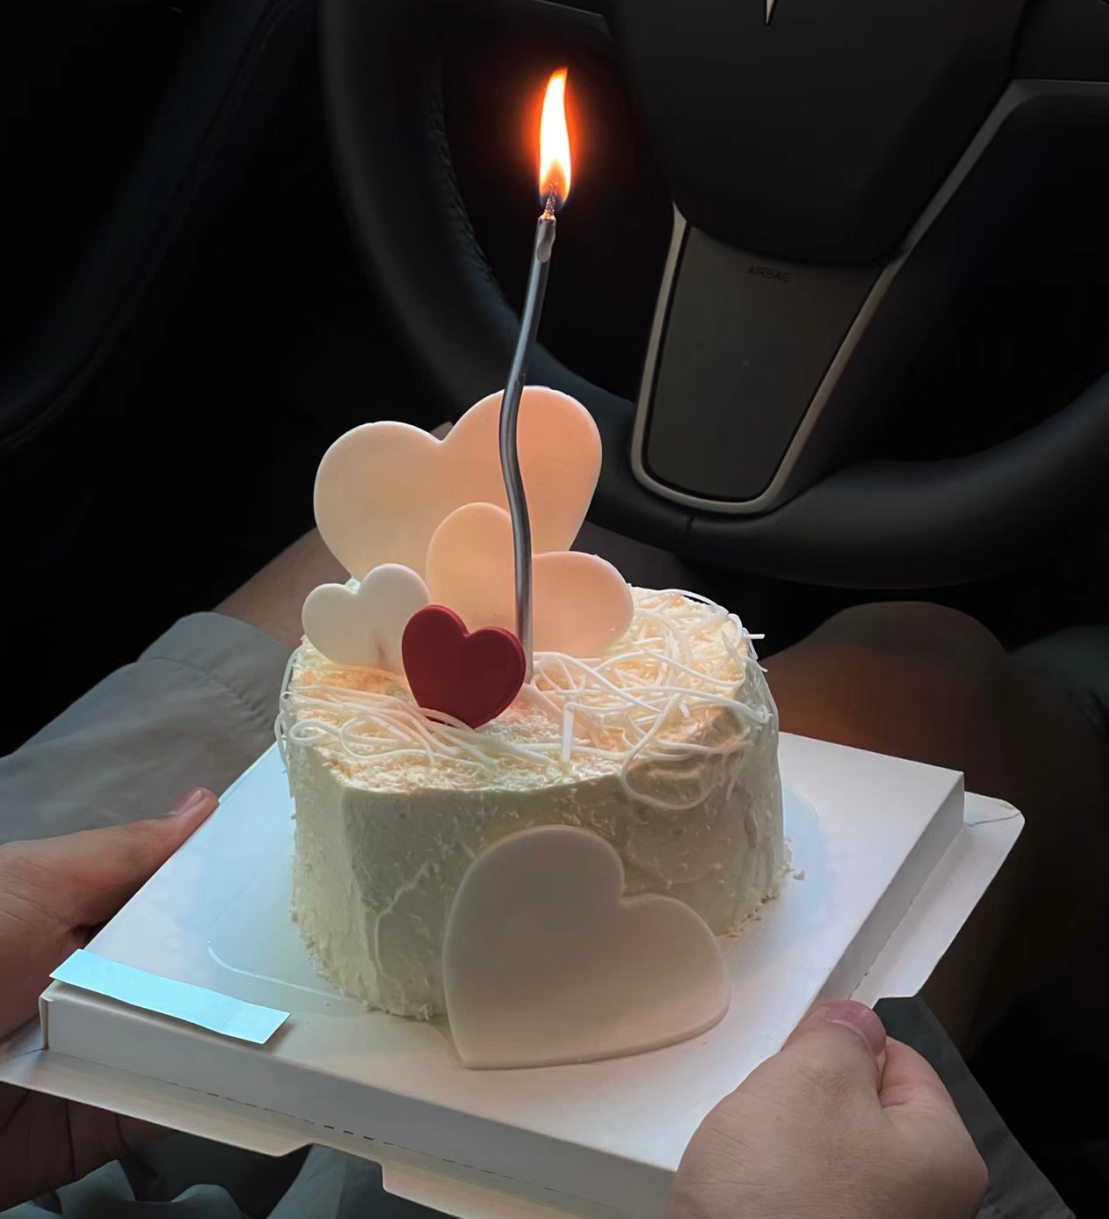 Valentines heart cake